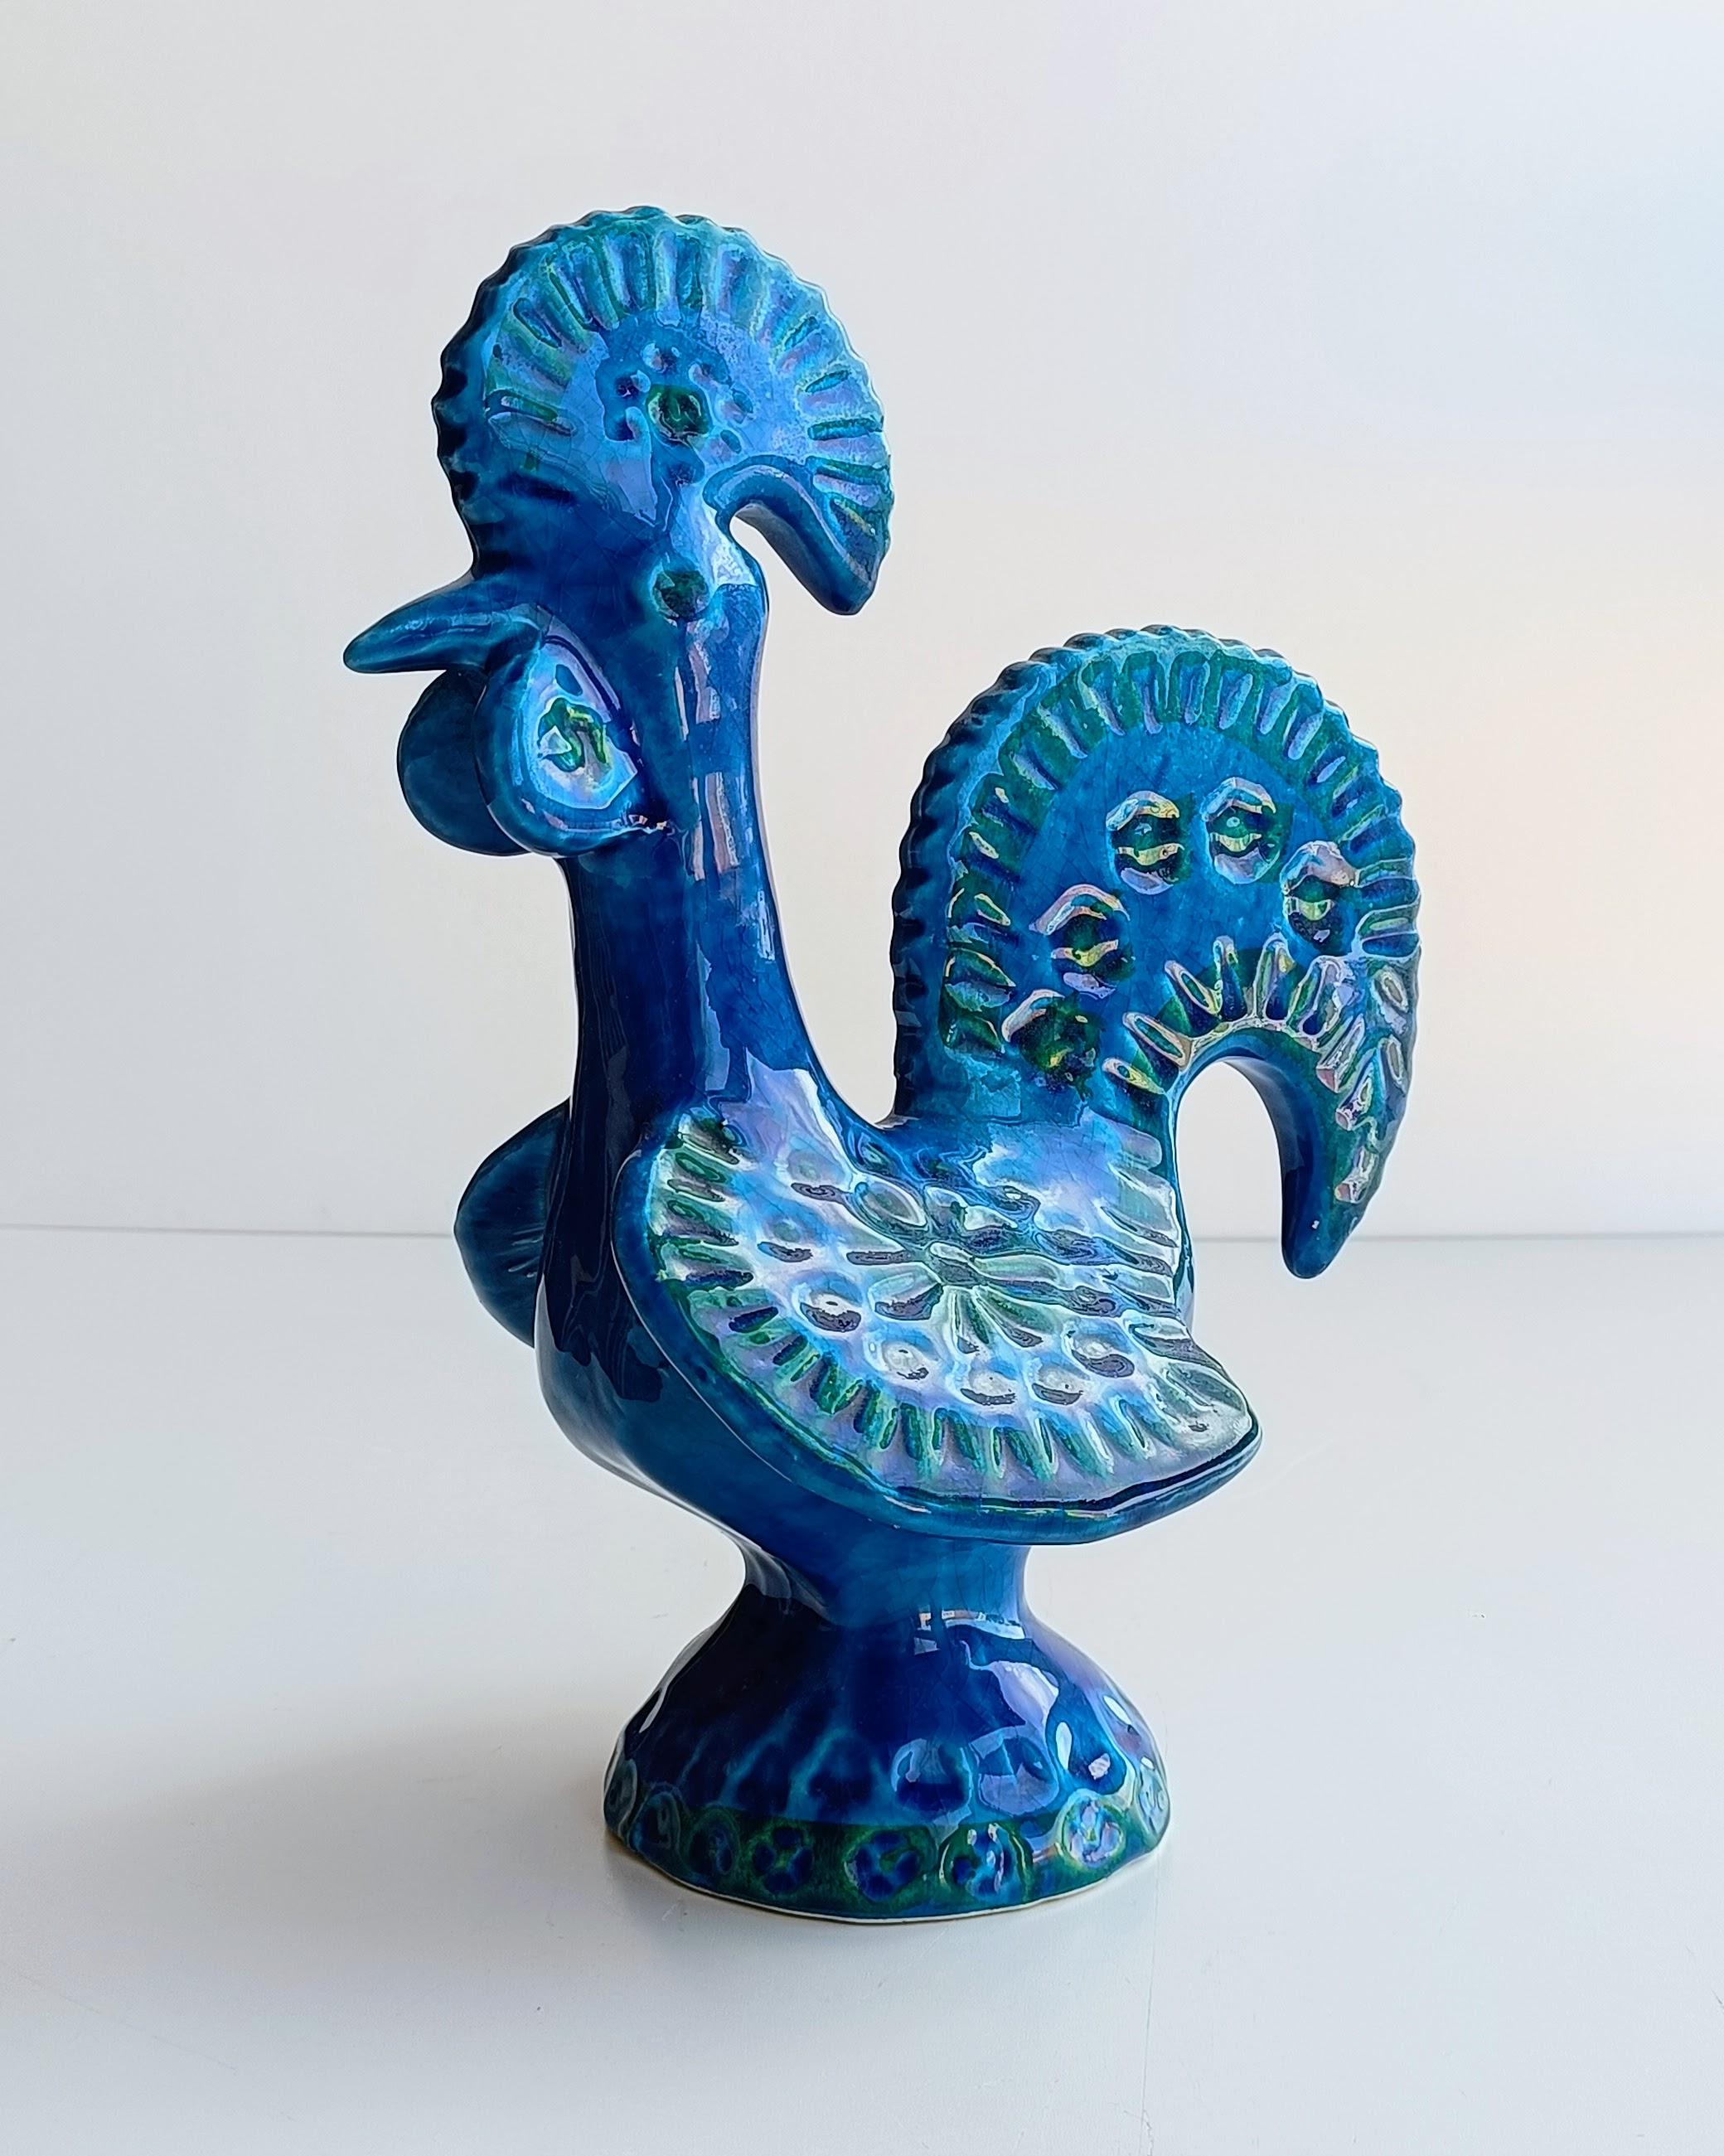 Glazed Bitossi Aldo Londi Rimini Blu Vintage Mid Century Ceramic Sculpture , 1960s For Sale